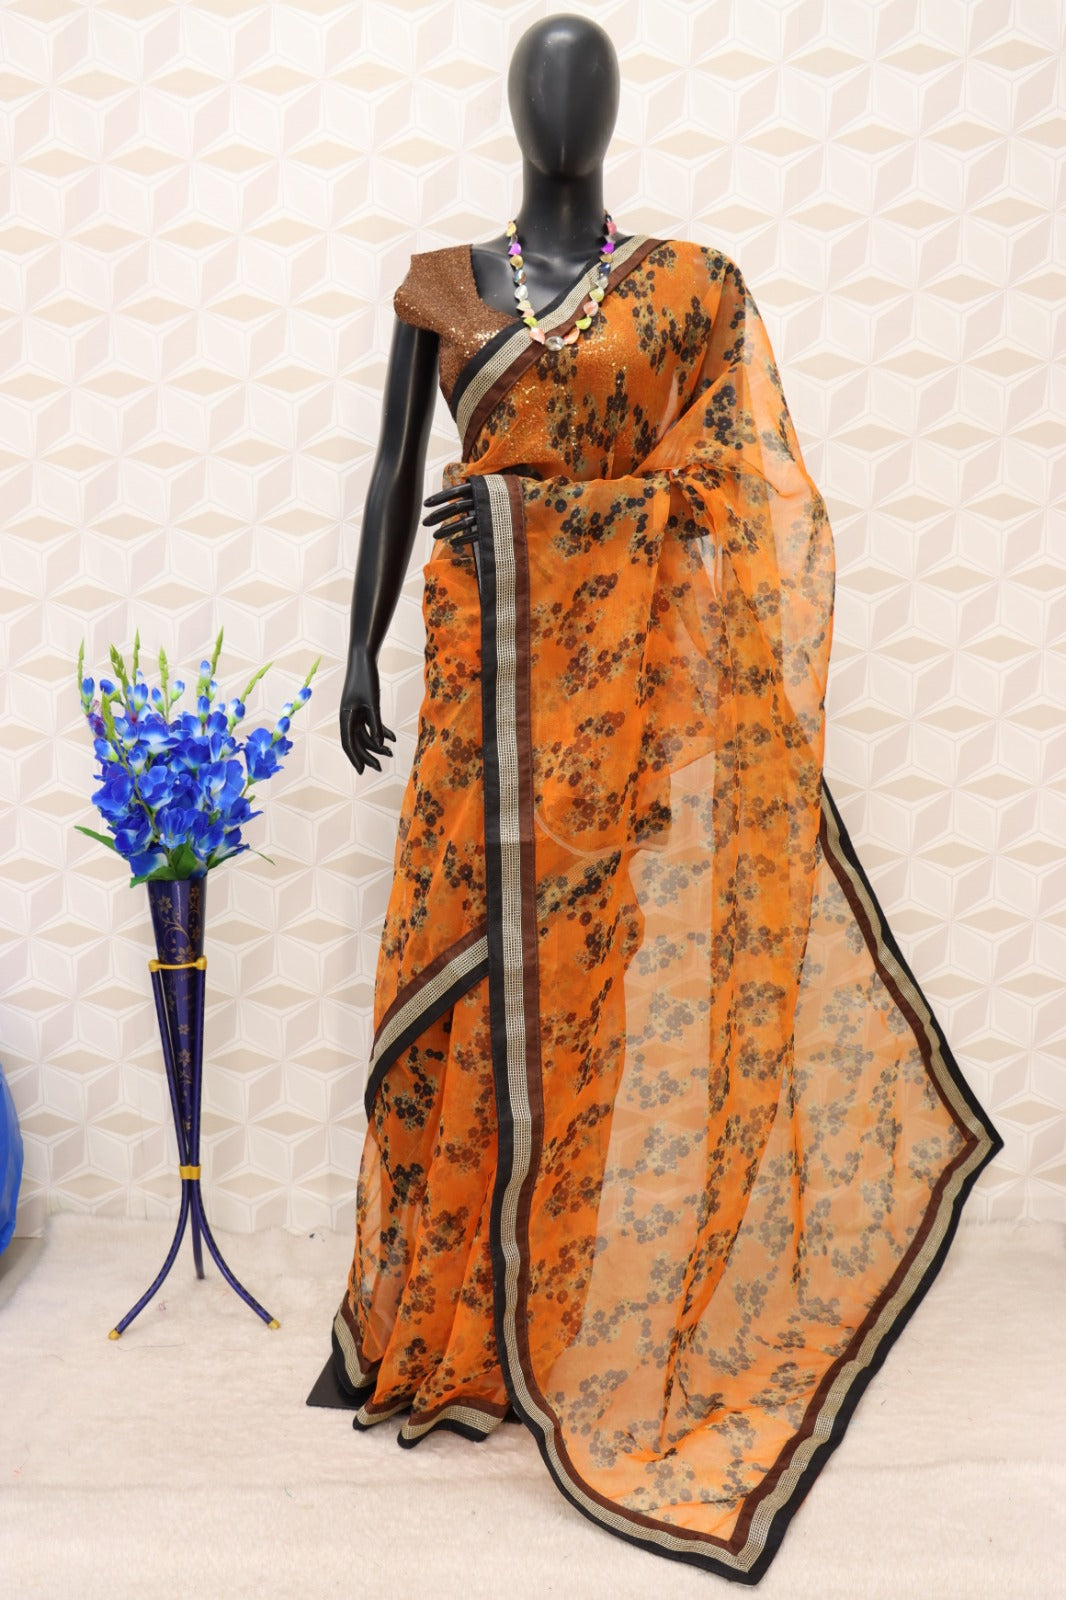 Alia Bhatt looks spectacular in a floral saree